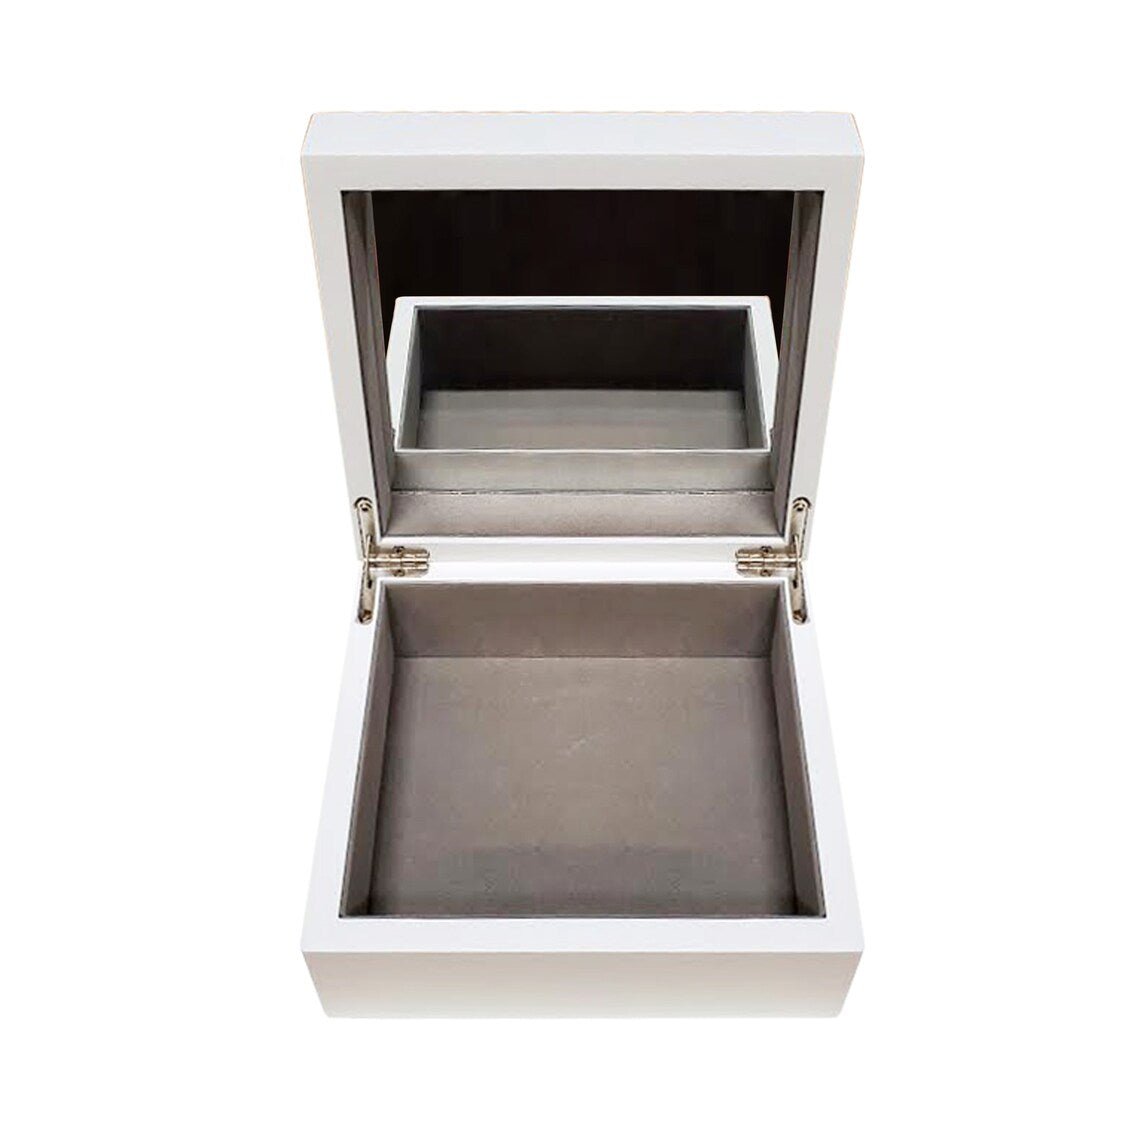 Modern Inspirational White Jewelry Keepsake Box for Godchildren 6x5.5 - A Godchild Fills Your Heart - LifeSong Milestones